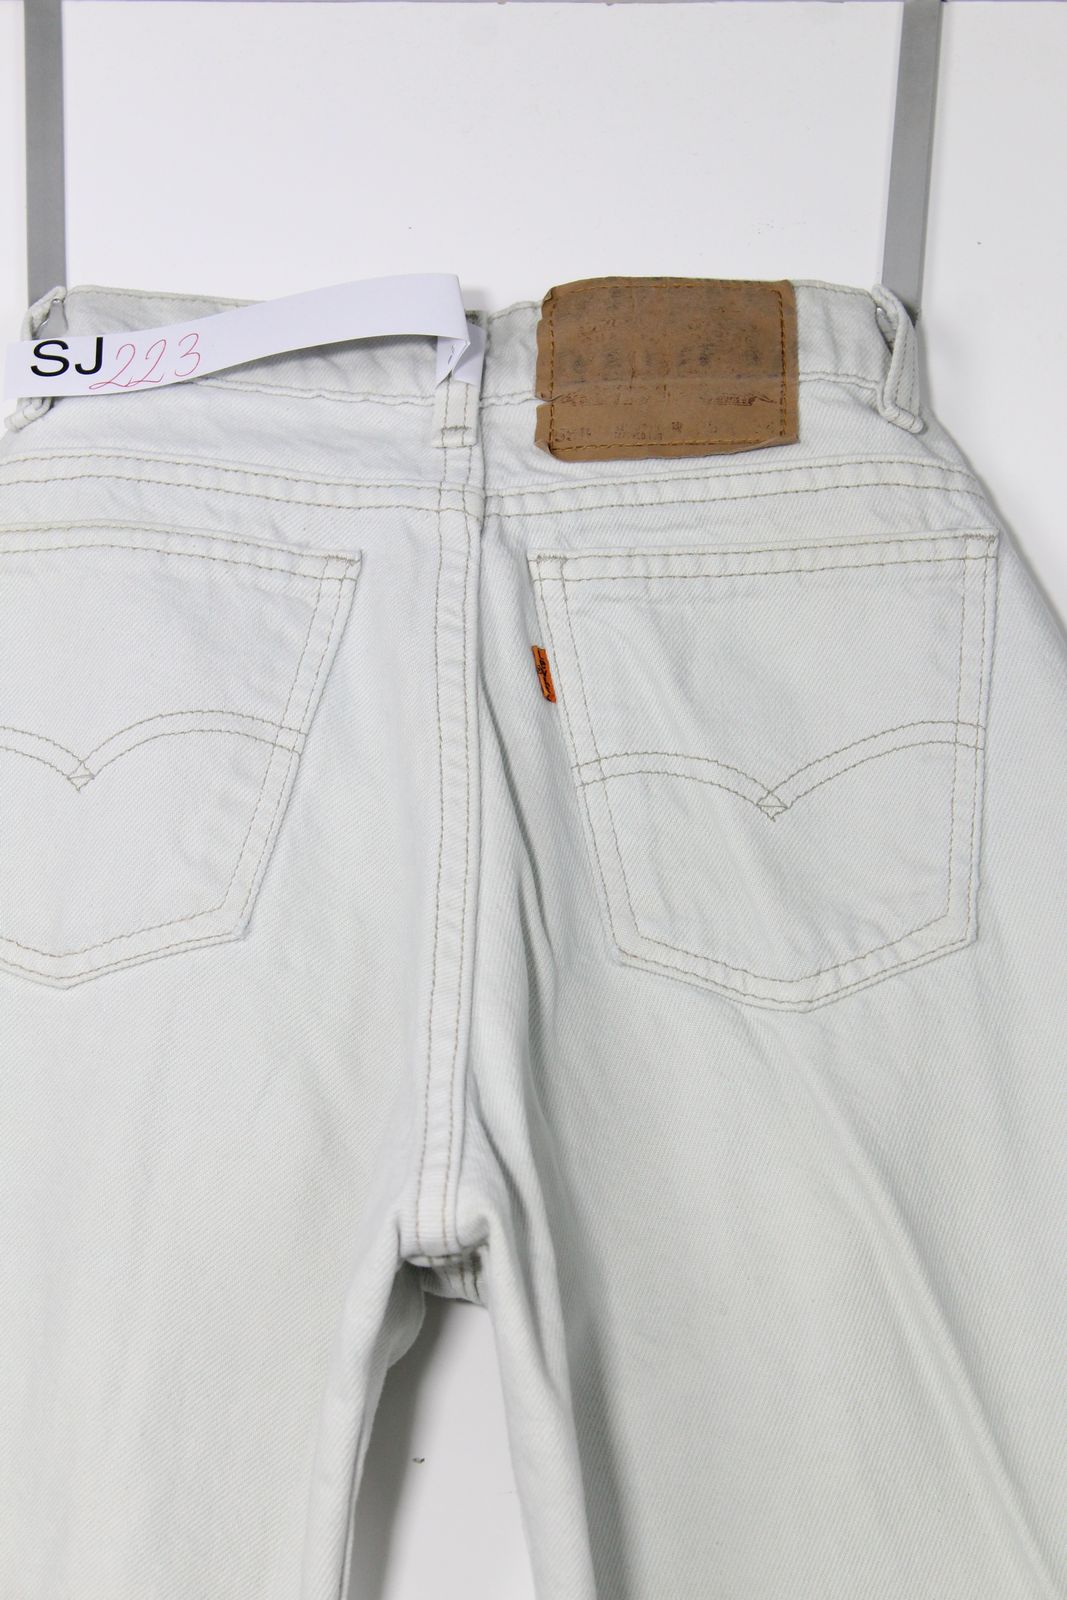 Levi's 505 Orange Tab W29 L32 Made In USA Jeans Vintage